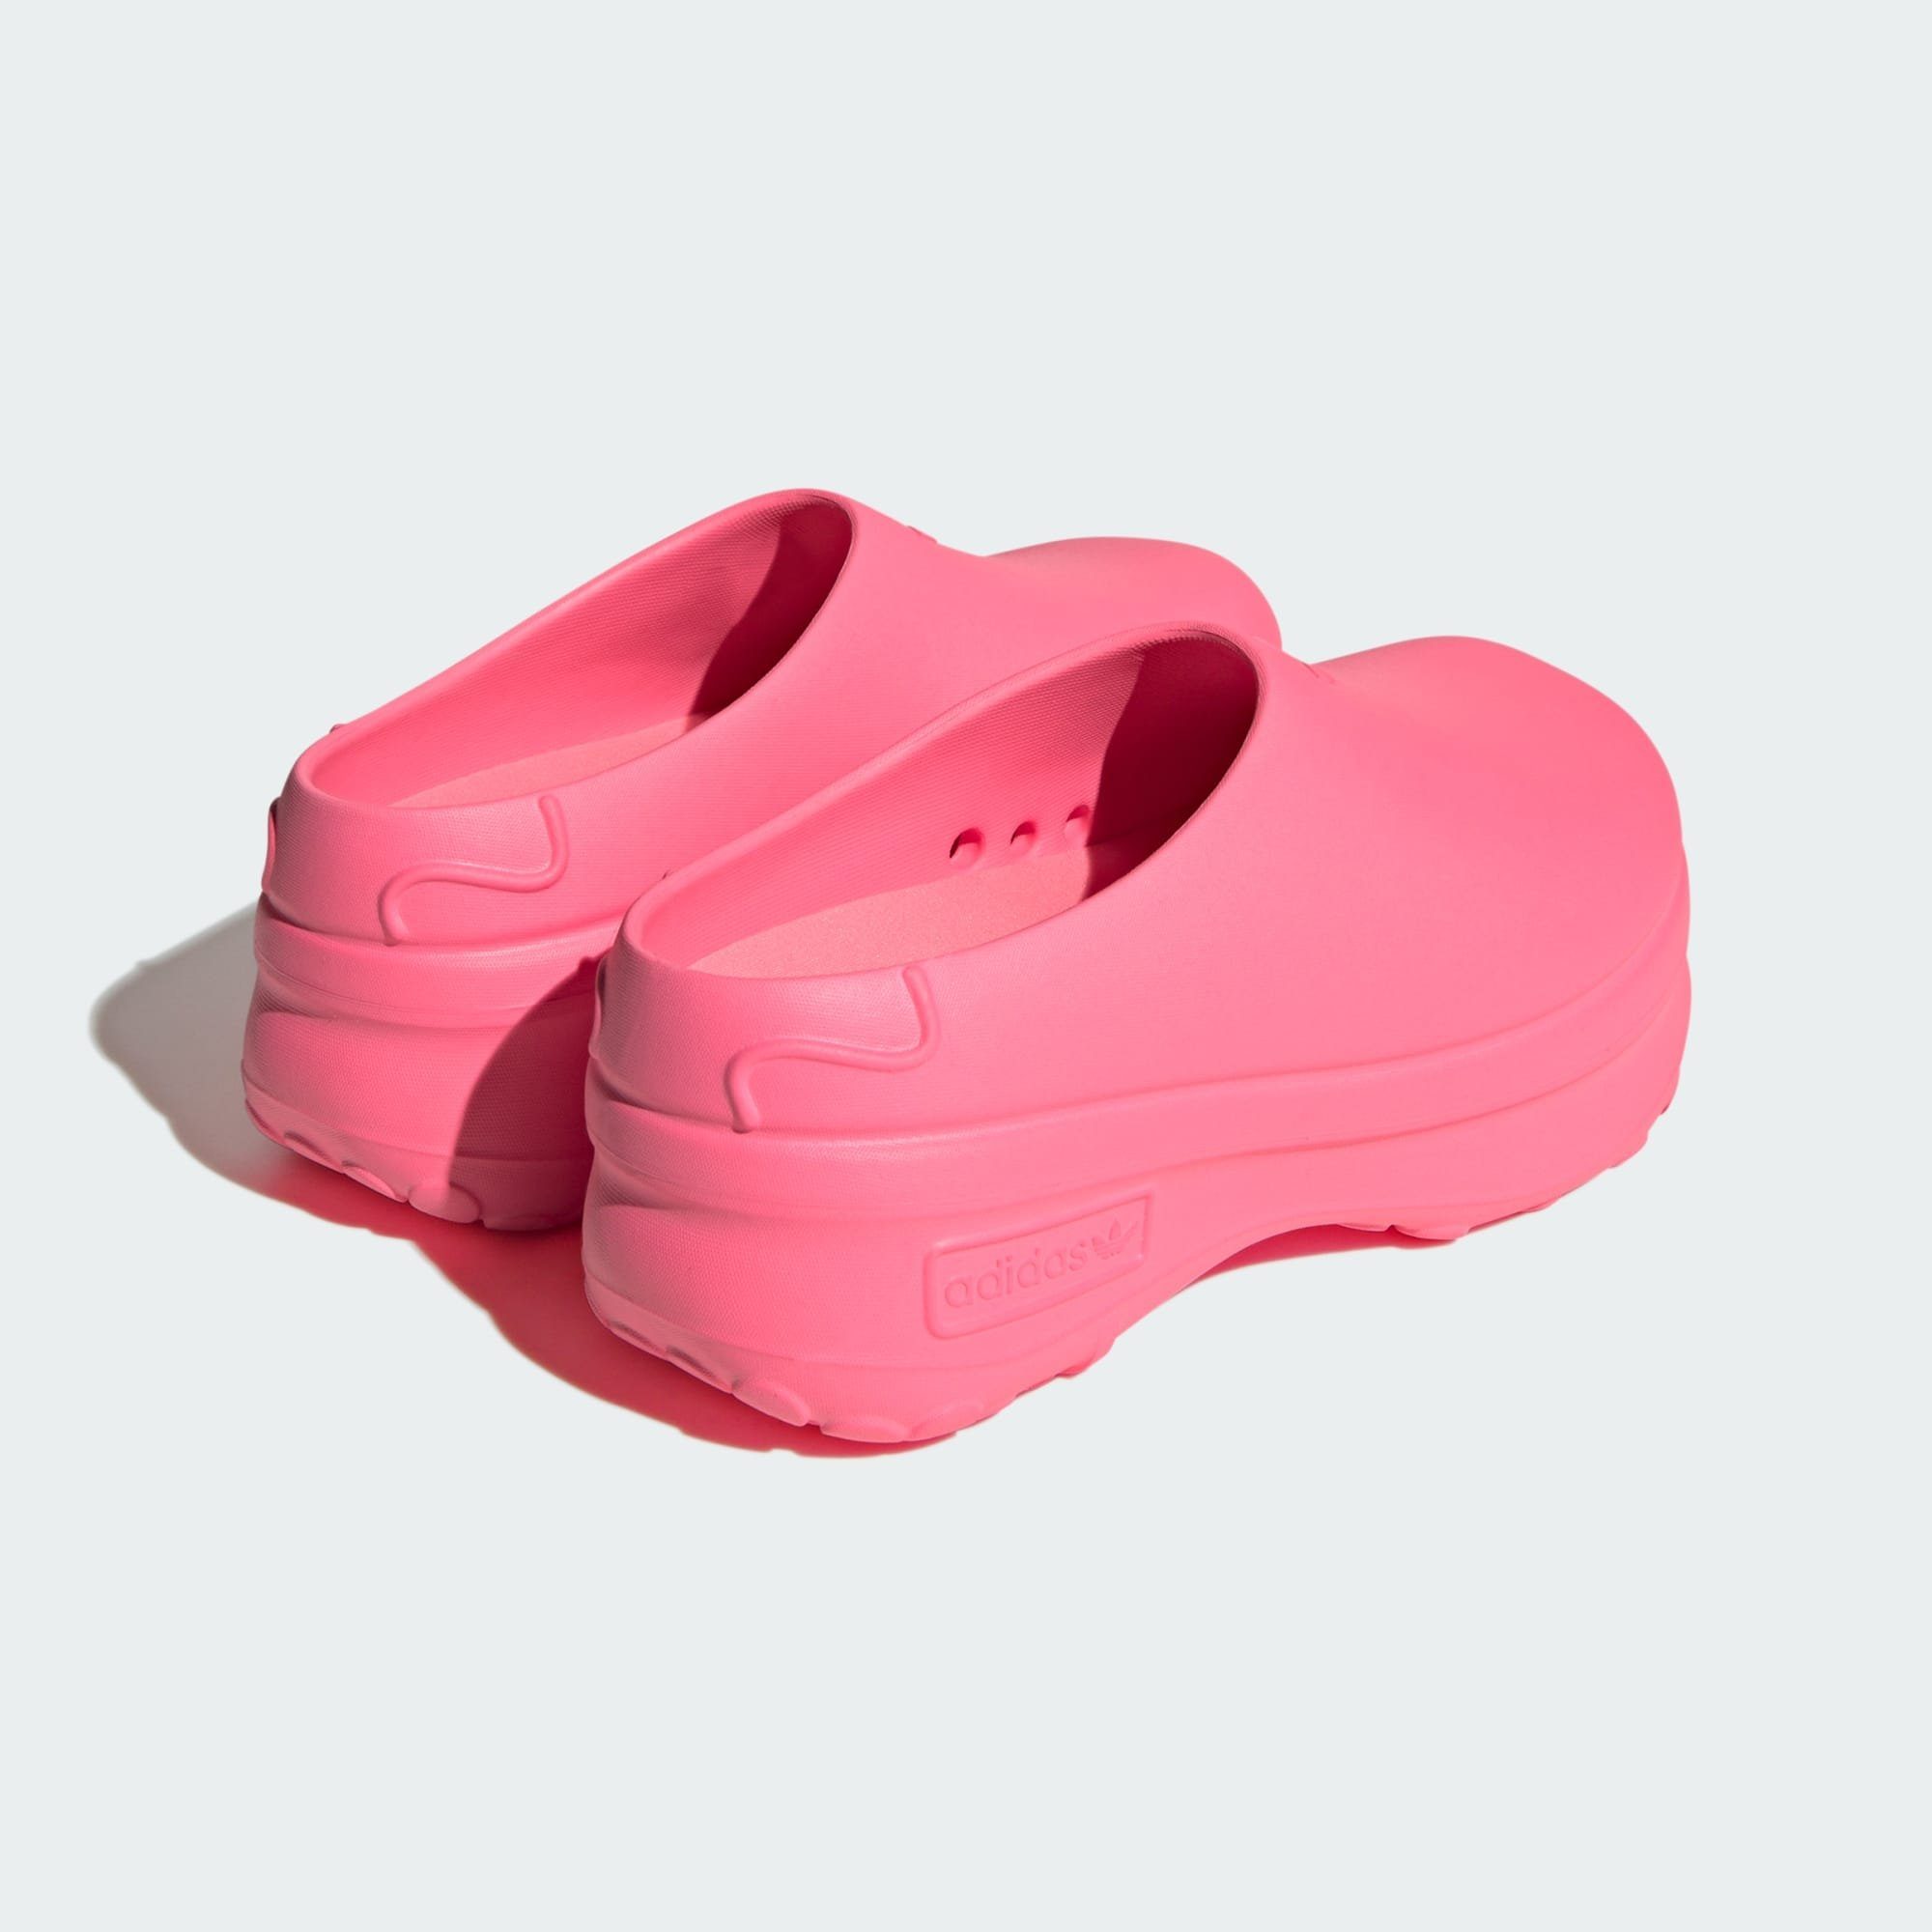 adidas Originals ADIFOM STAN SMITH Black Pink Lucid Lucid Core / Pink Slipper MULE 